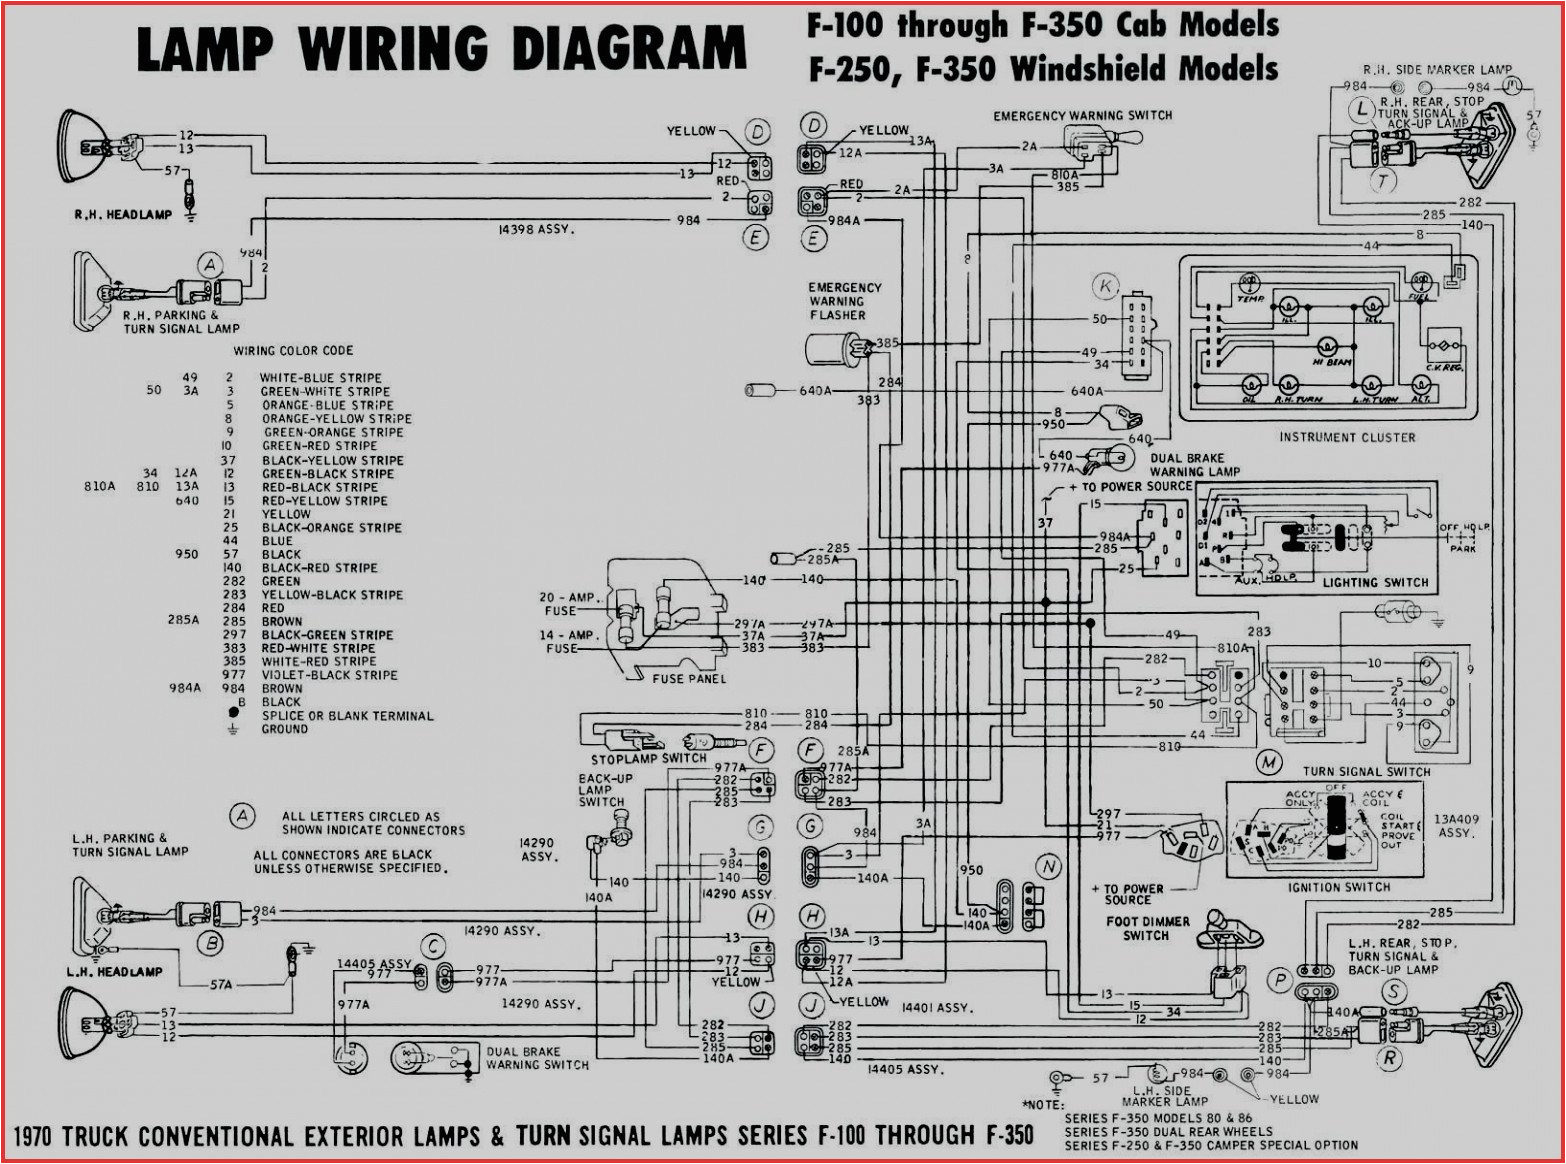 115v motor wiring